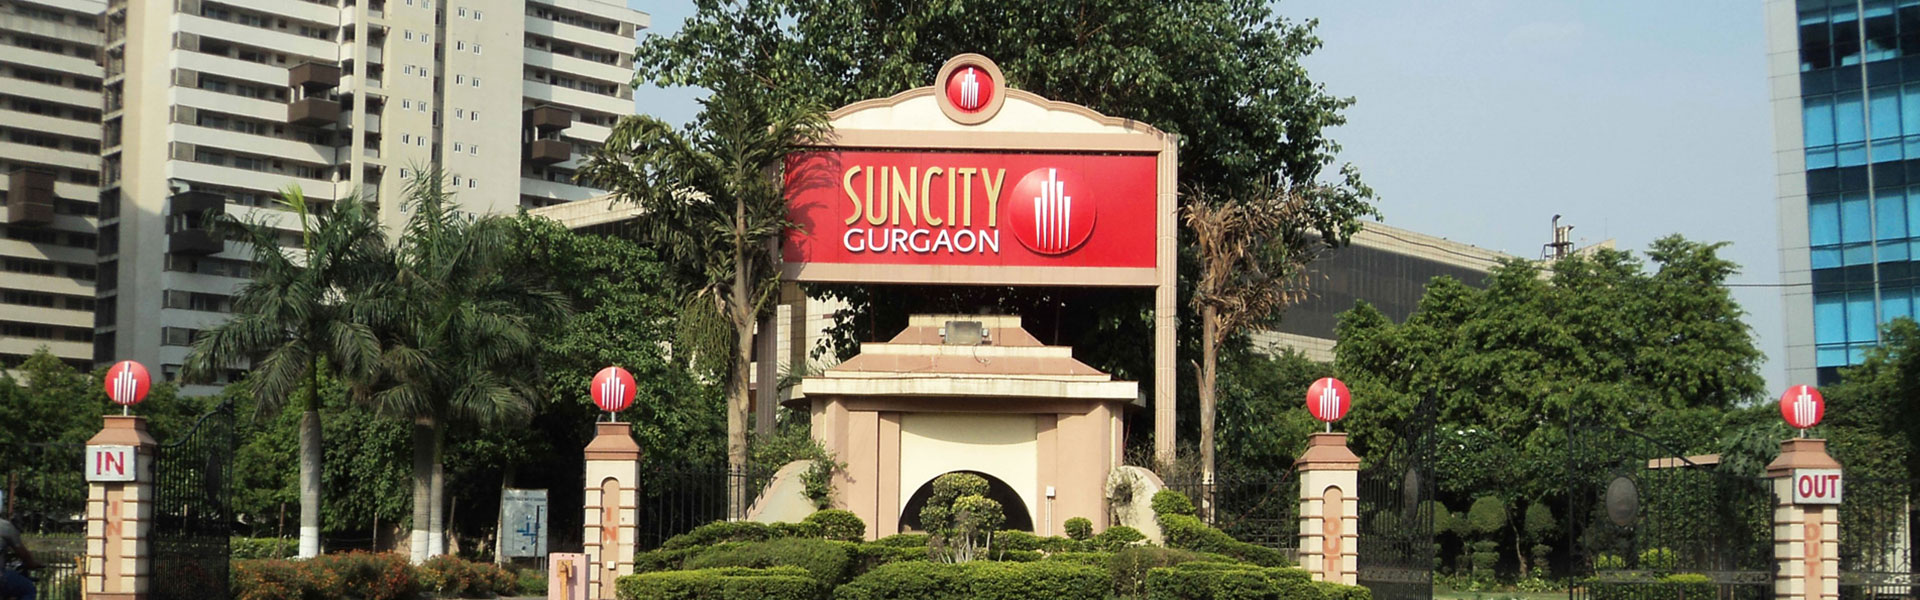 Suncity Township